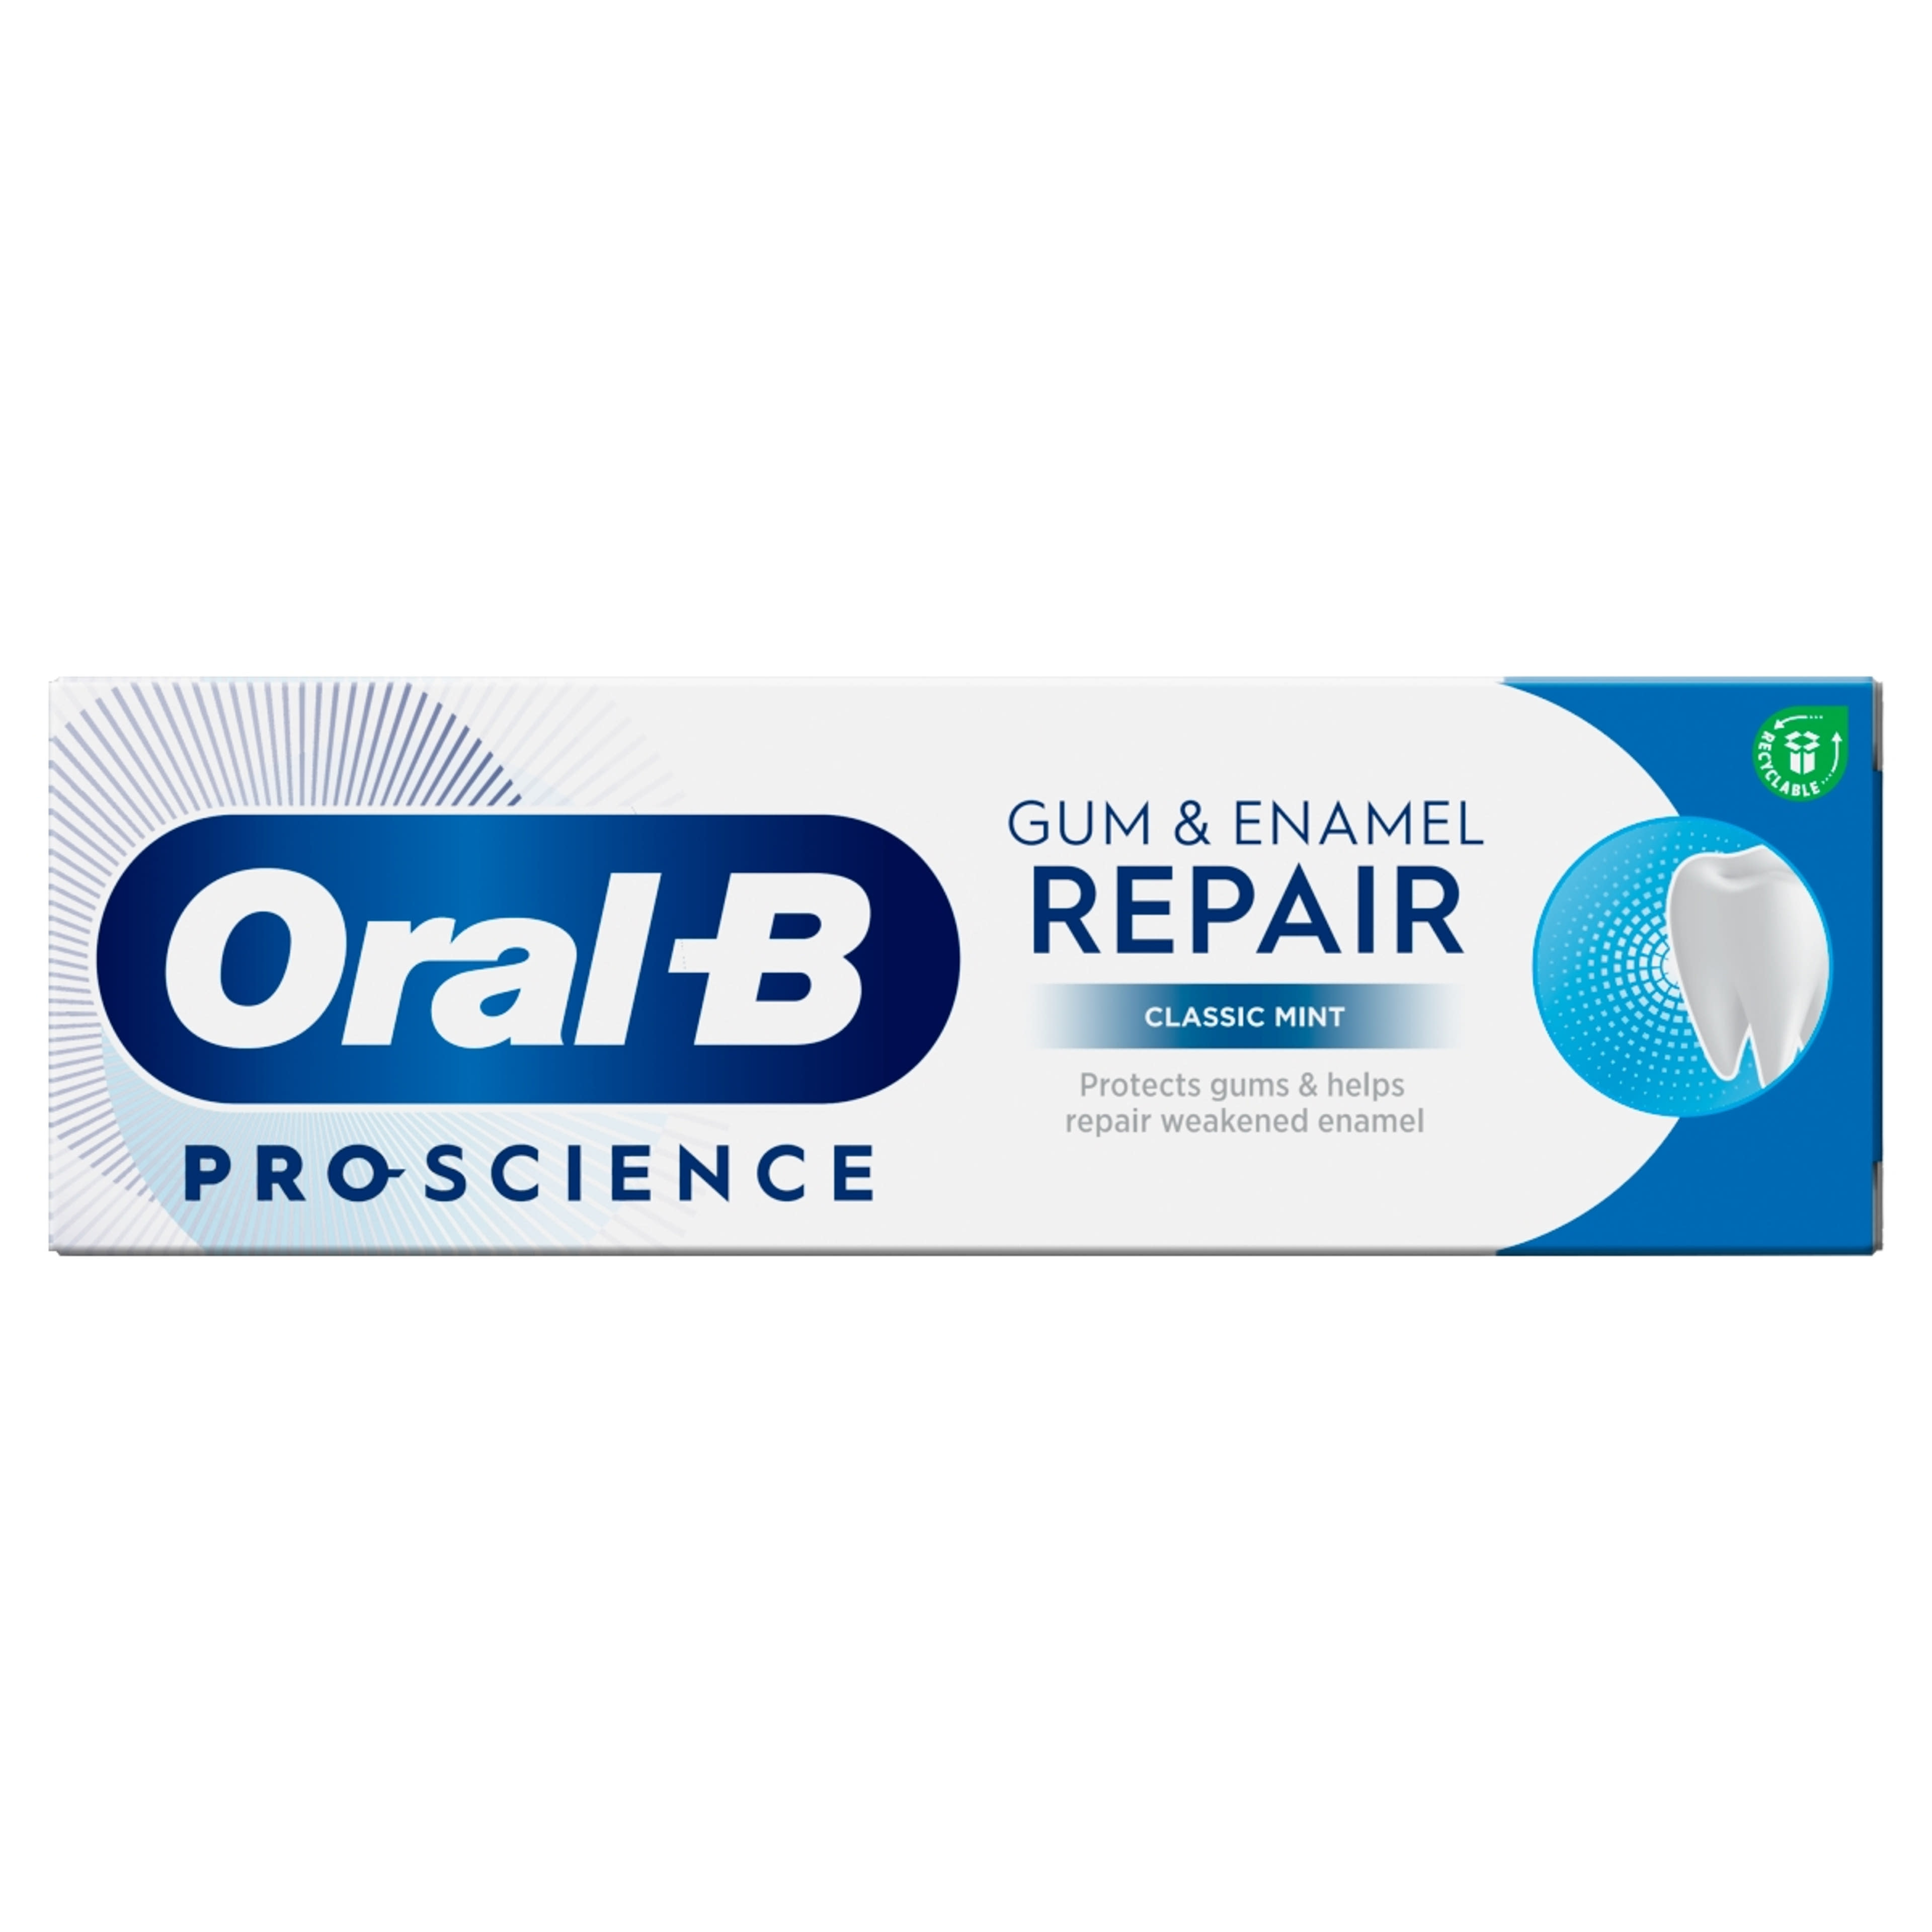 Oral-B Pro-Science Gum & Enamel Repair Original fogkrém - 75 ml